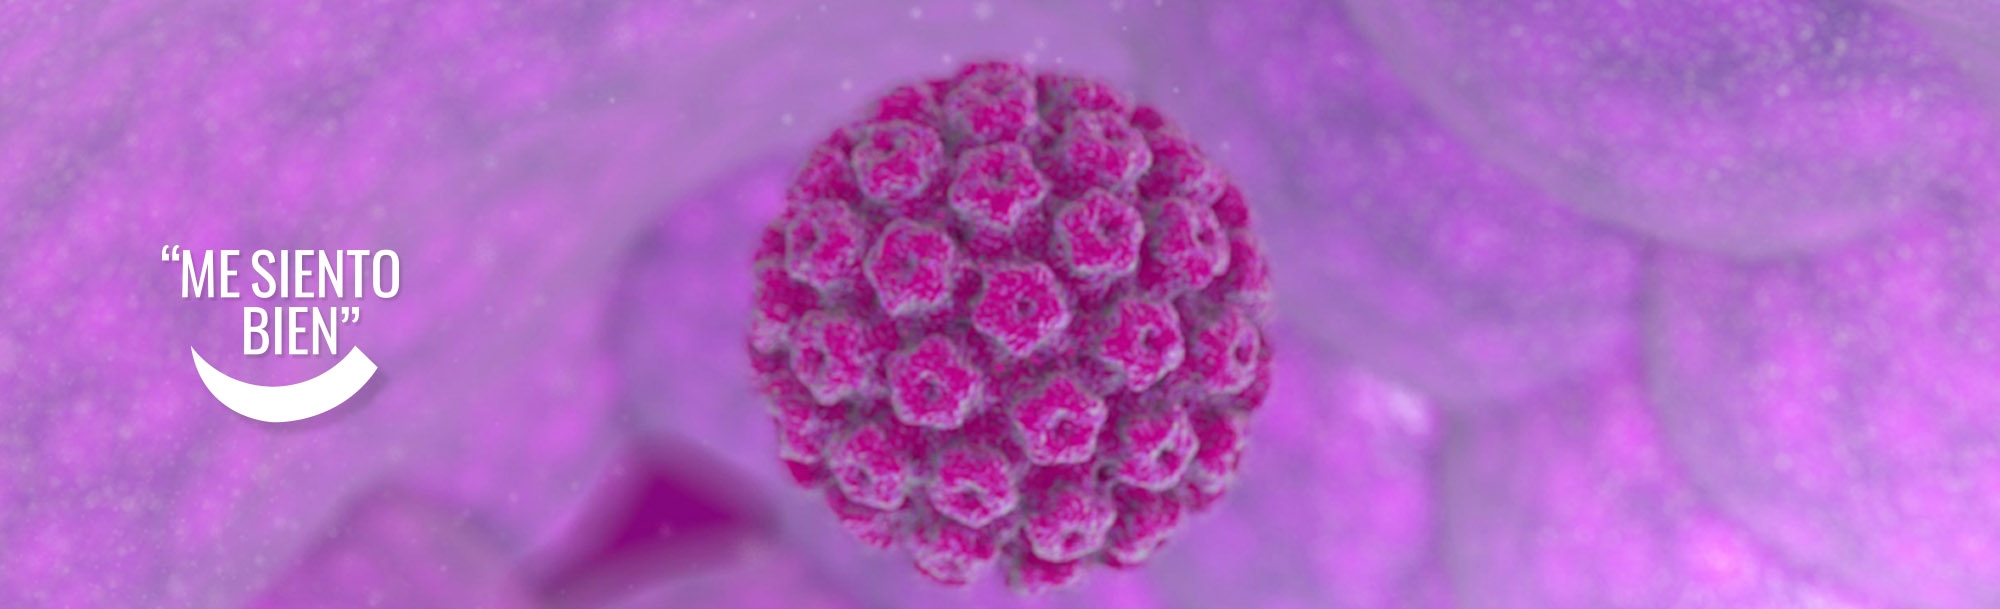 VPH- Virus del papiloma humano